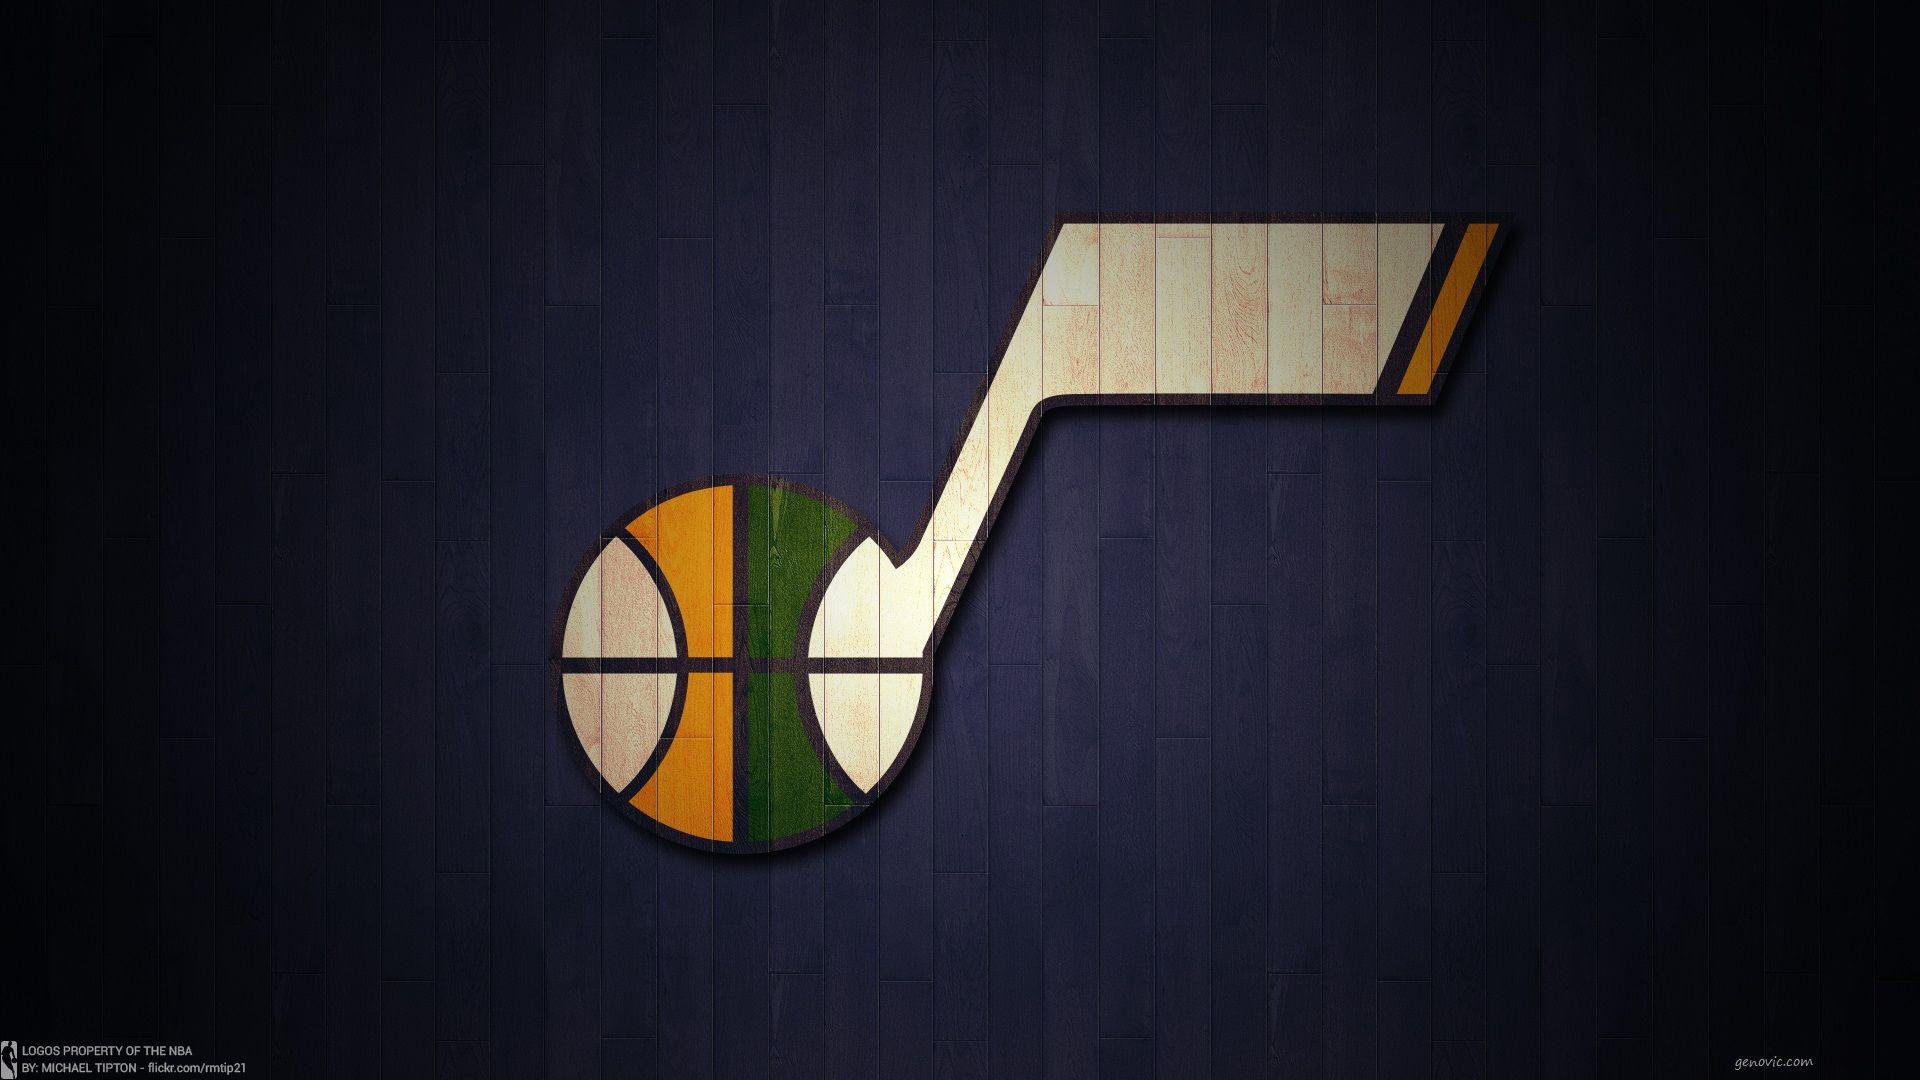 Utah Jazz iPad Wallpaper And Background. Utah jazz